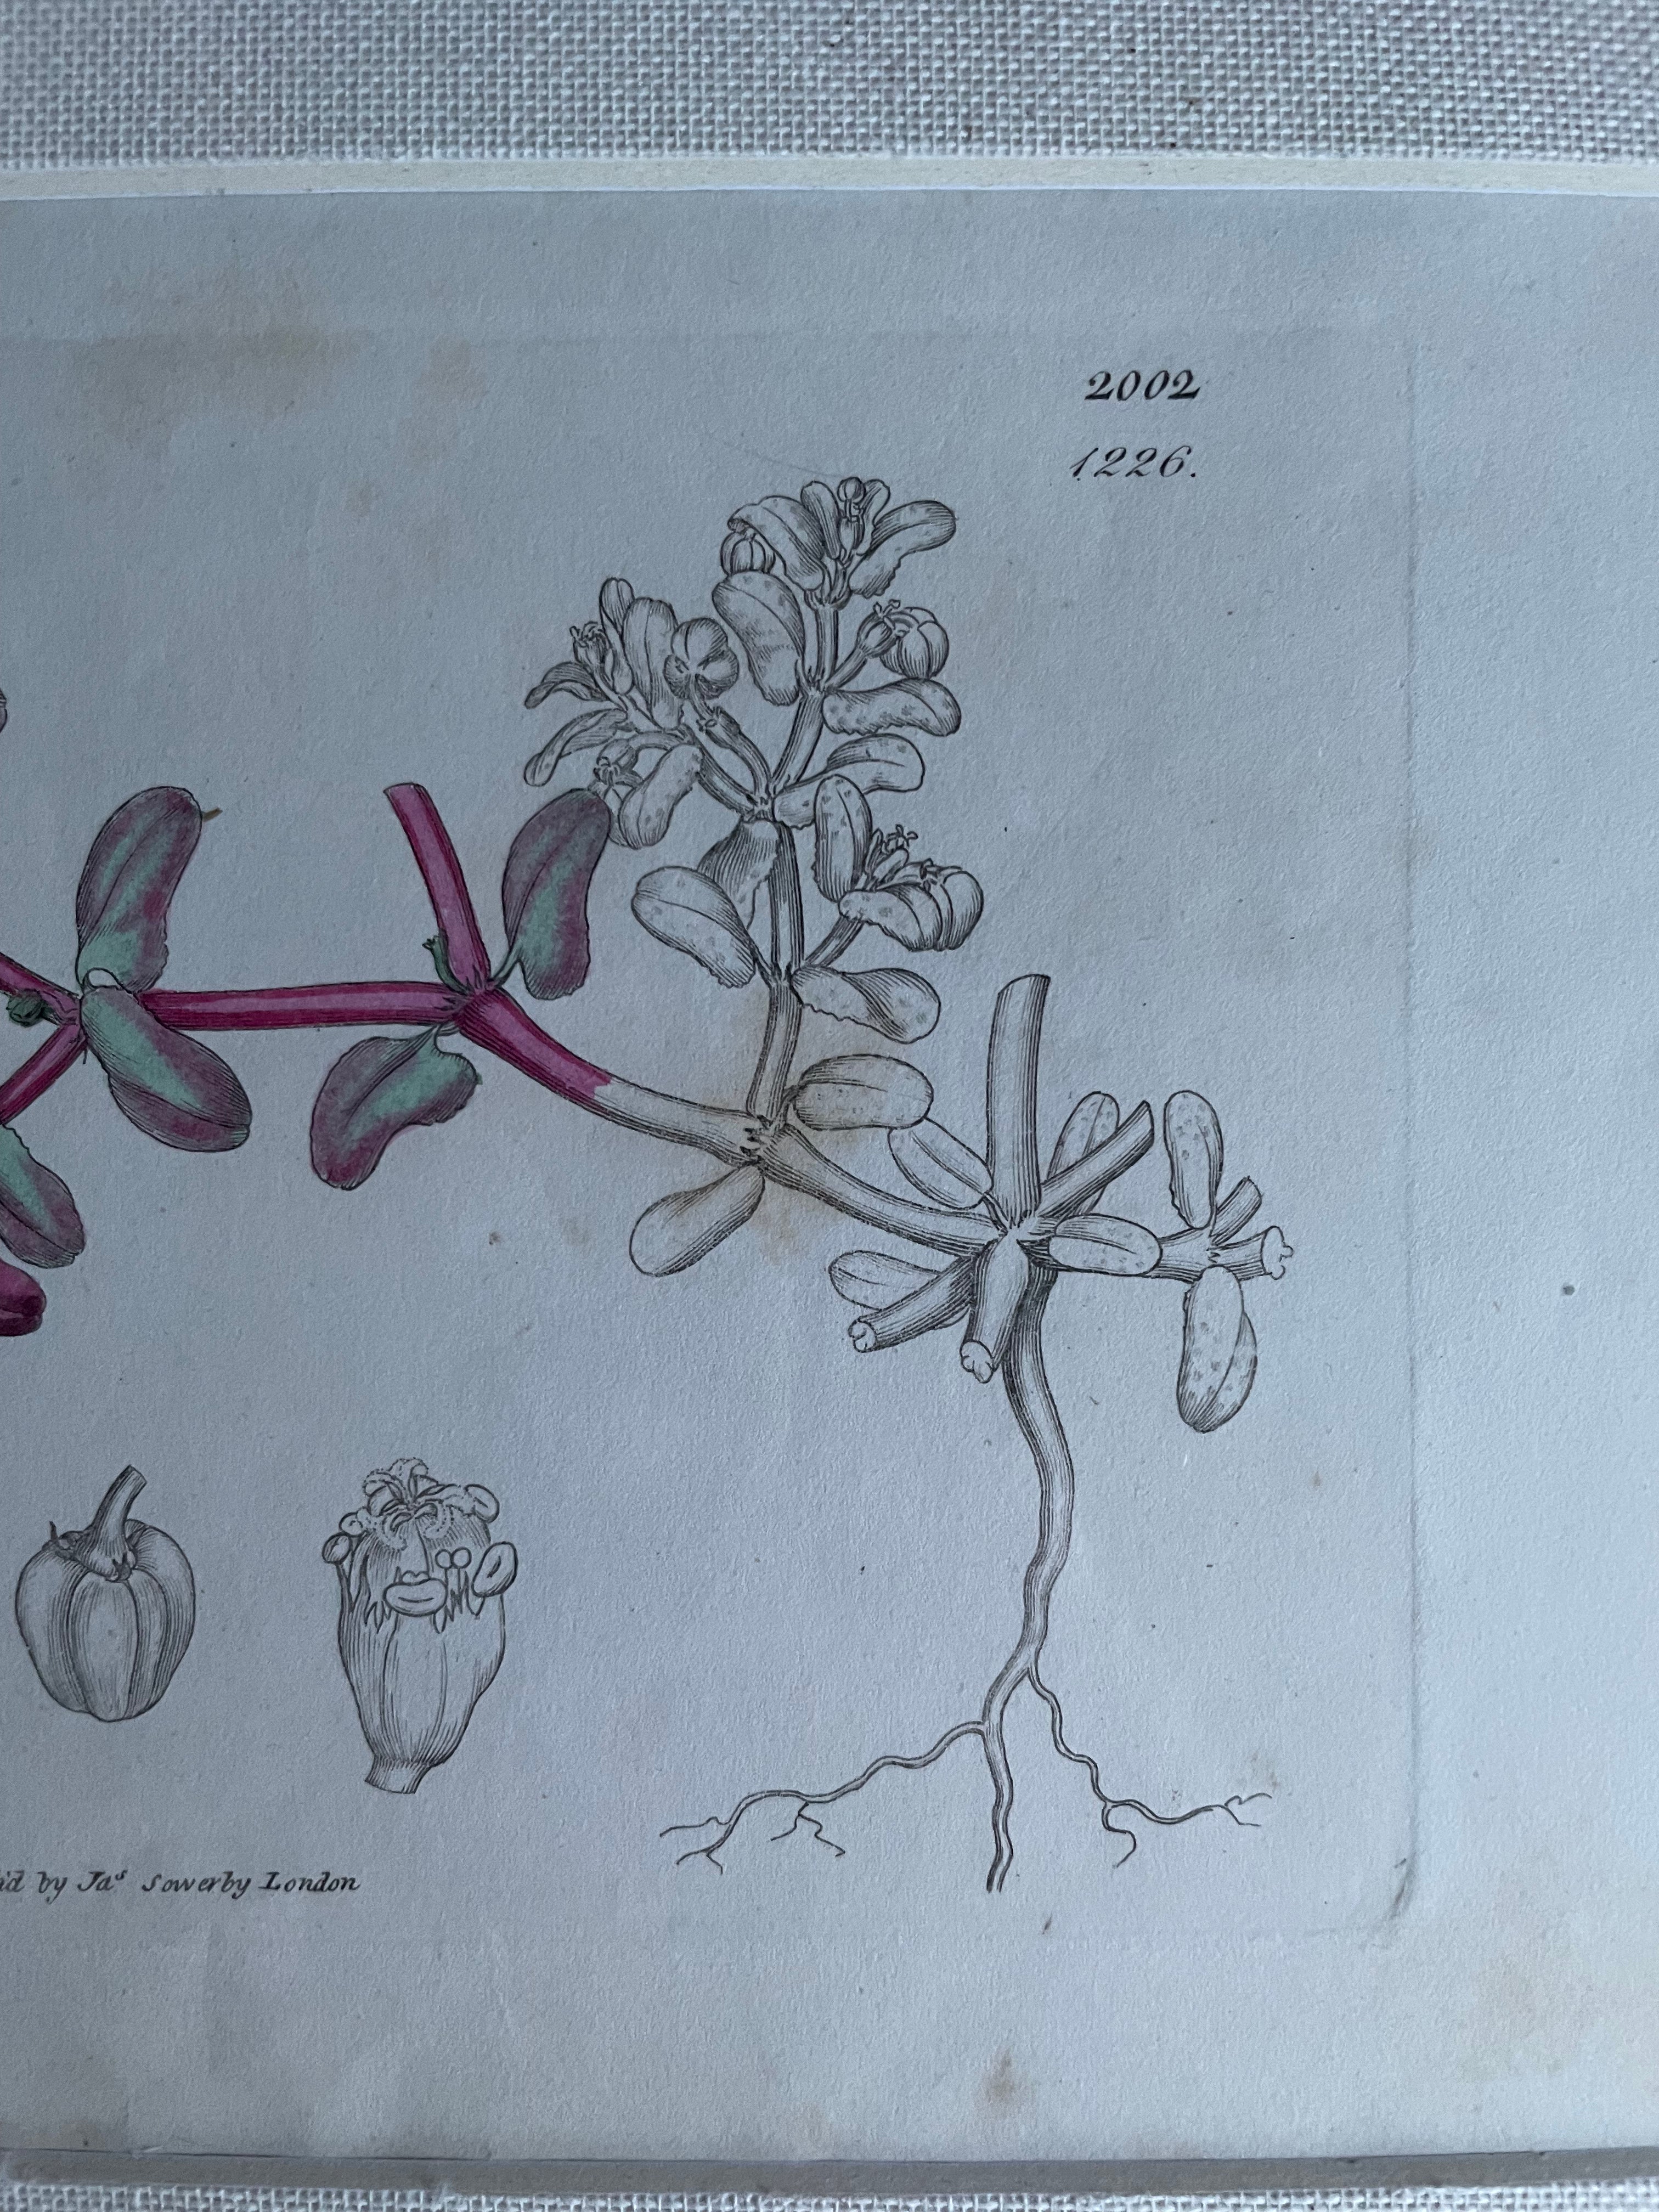 19th Century Botanical Illustration with Linen Mount - Euphorbia Peptis